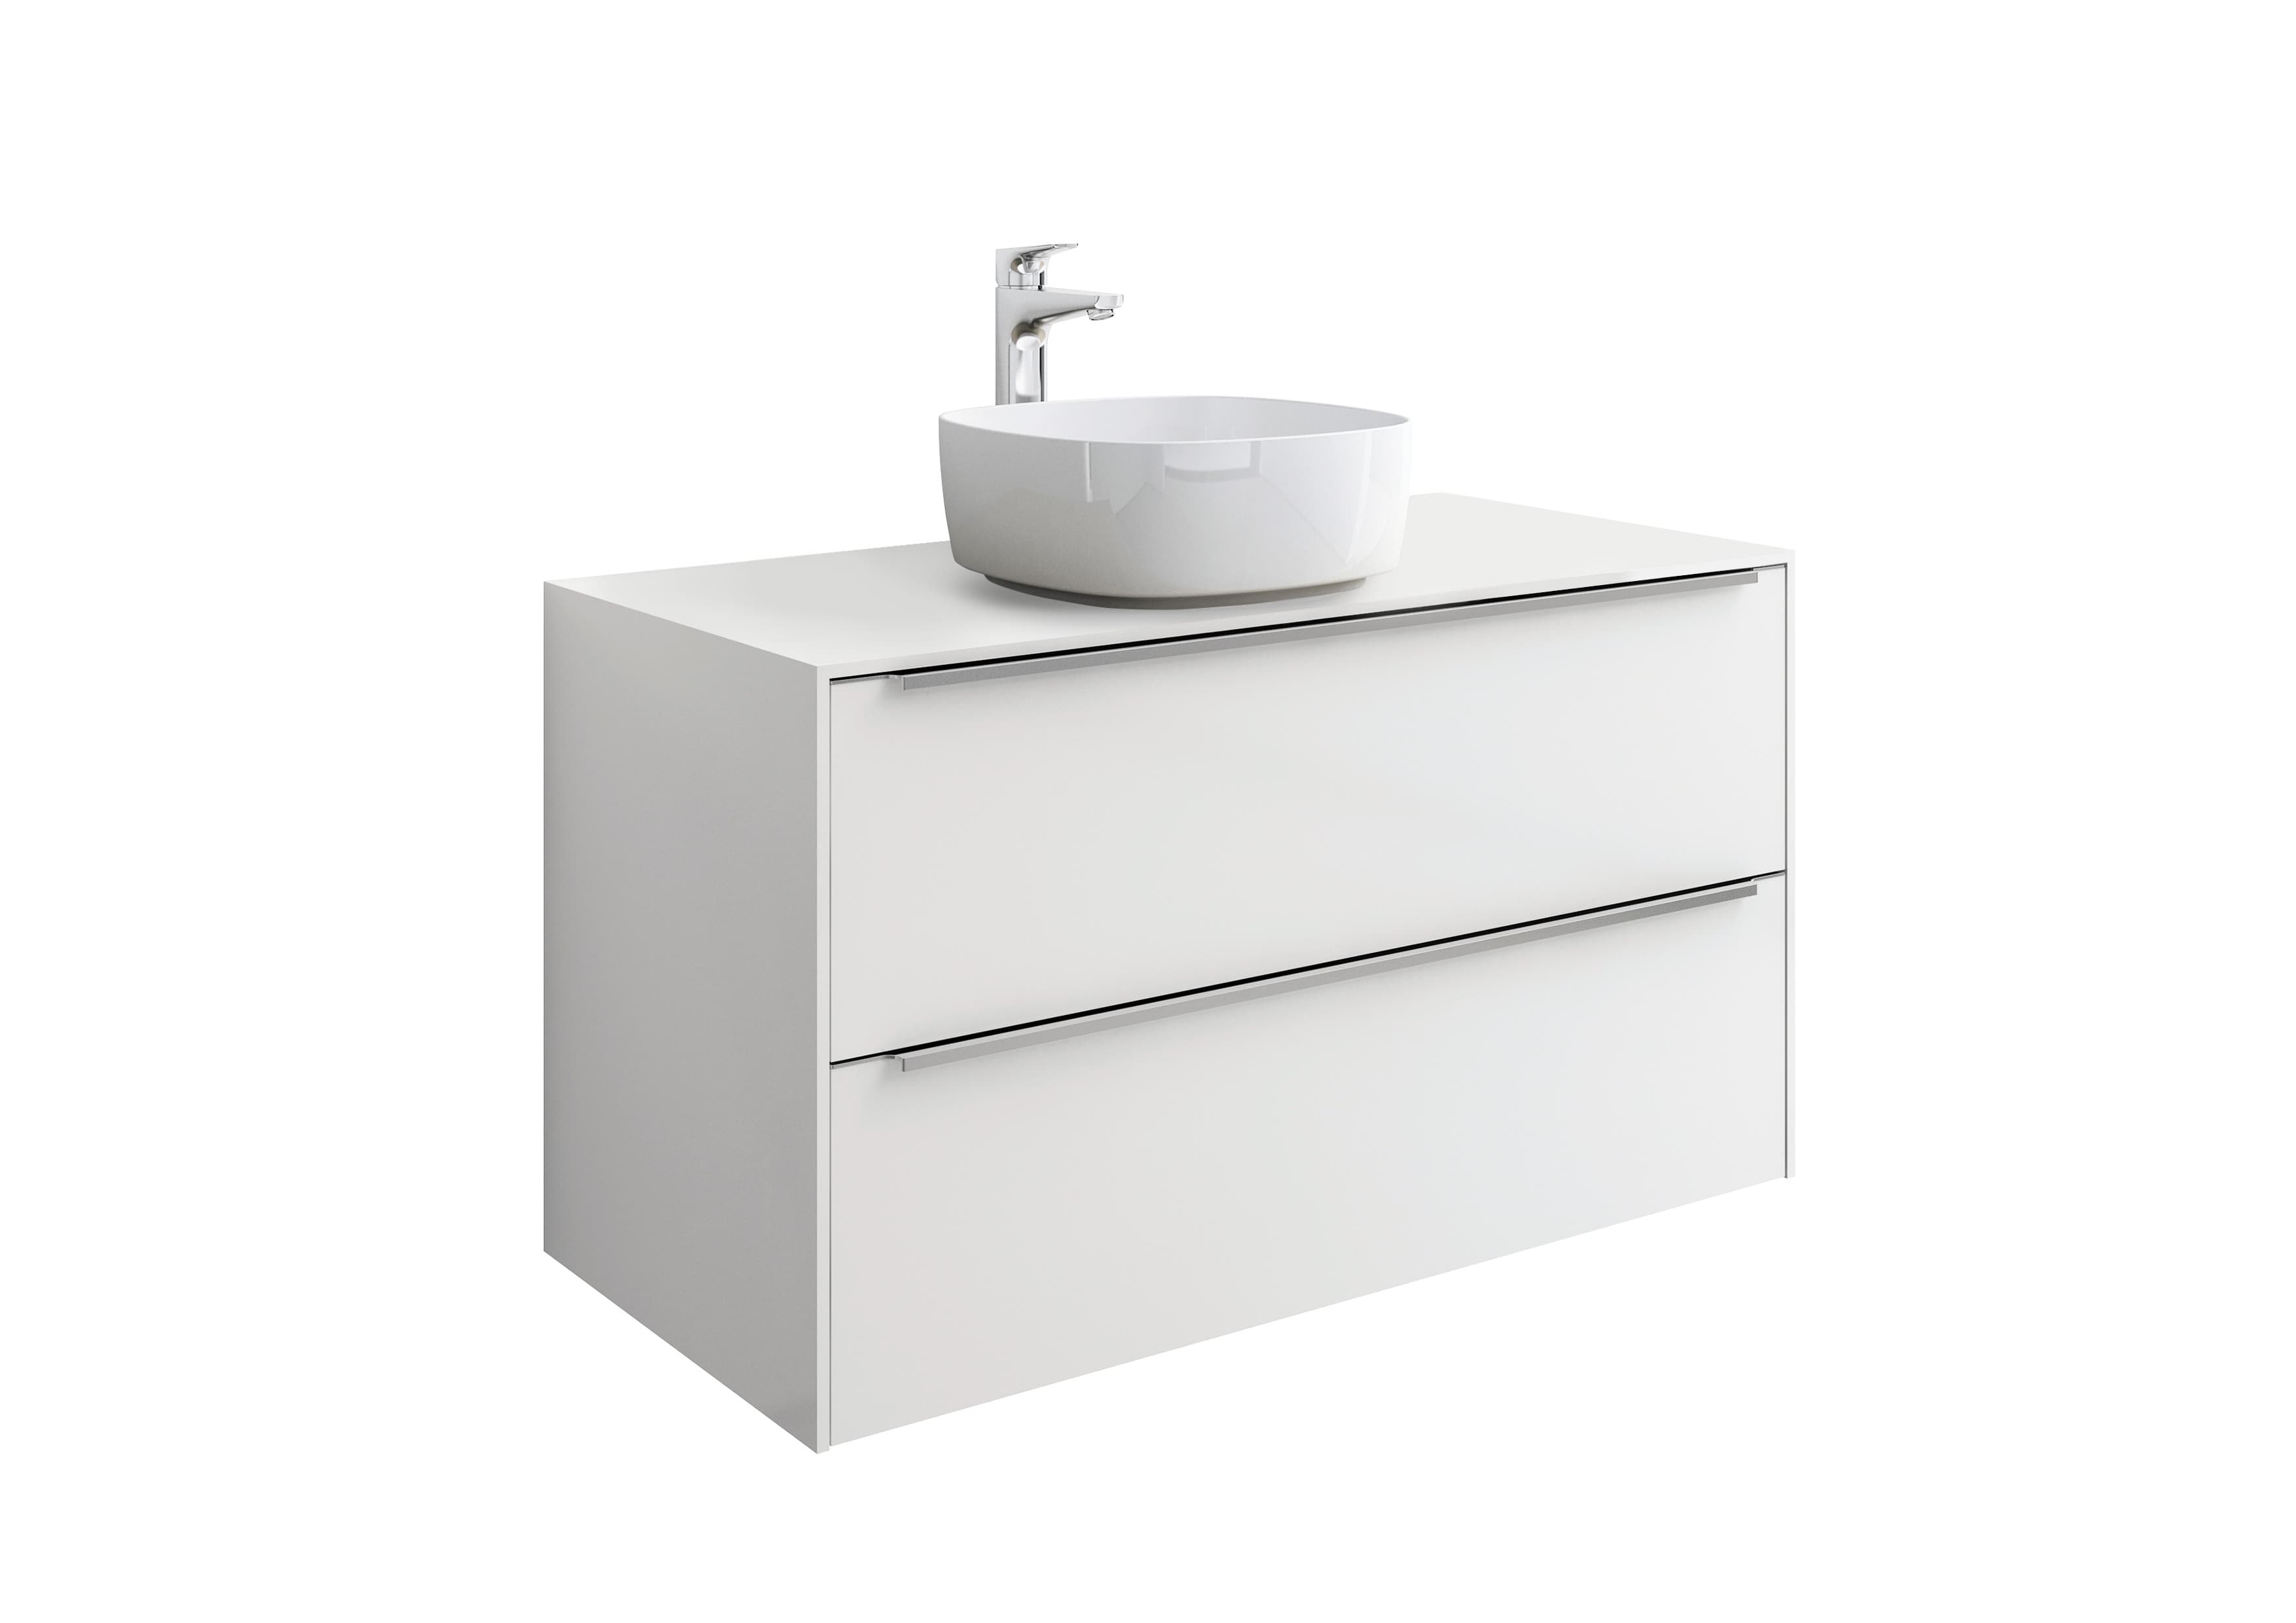 Sanitaire Meubles Salle de bain INSPIRA A851081402 Meuble 2 tiroirs avec plan pour vasque à poser Roca 3 - Mirage ceramica